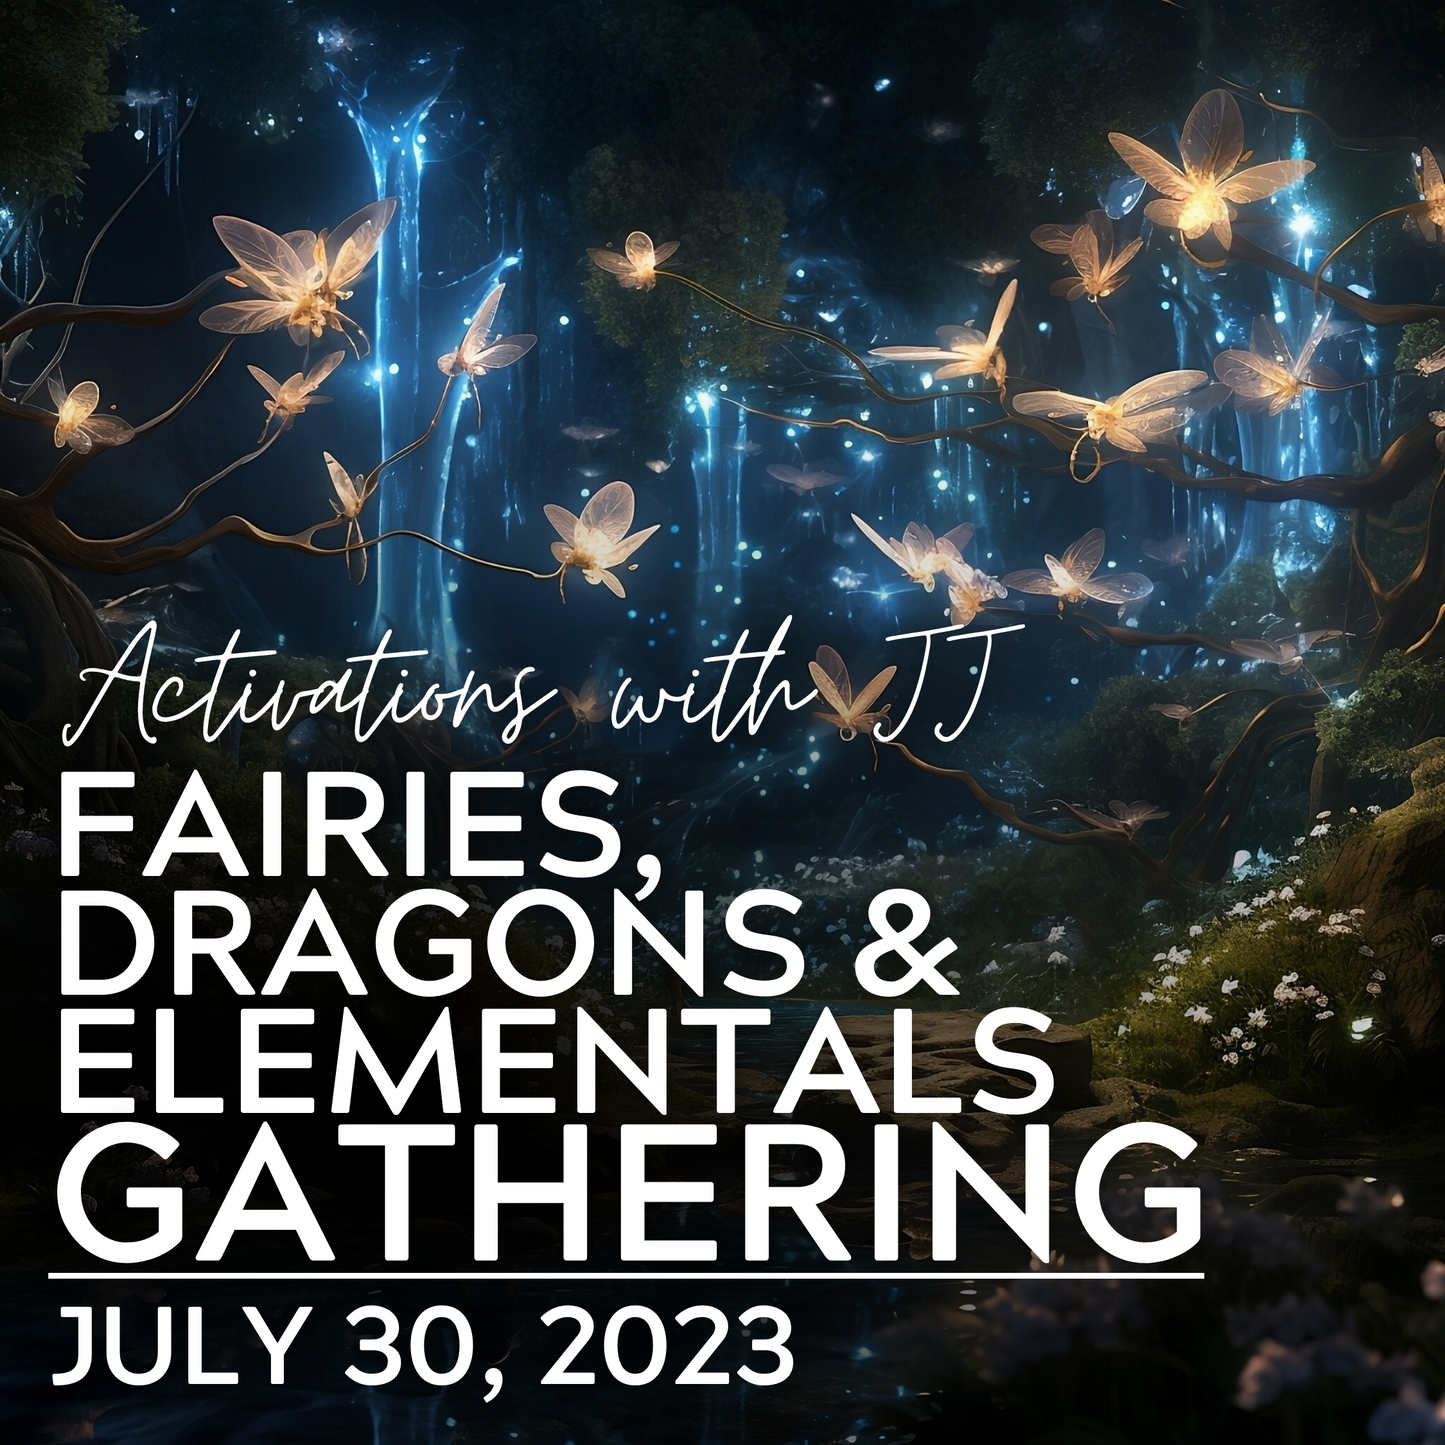 Fairies, Dragons & Elementals Gathering (MP3 Recording) | July 30, 2023